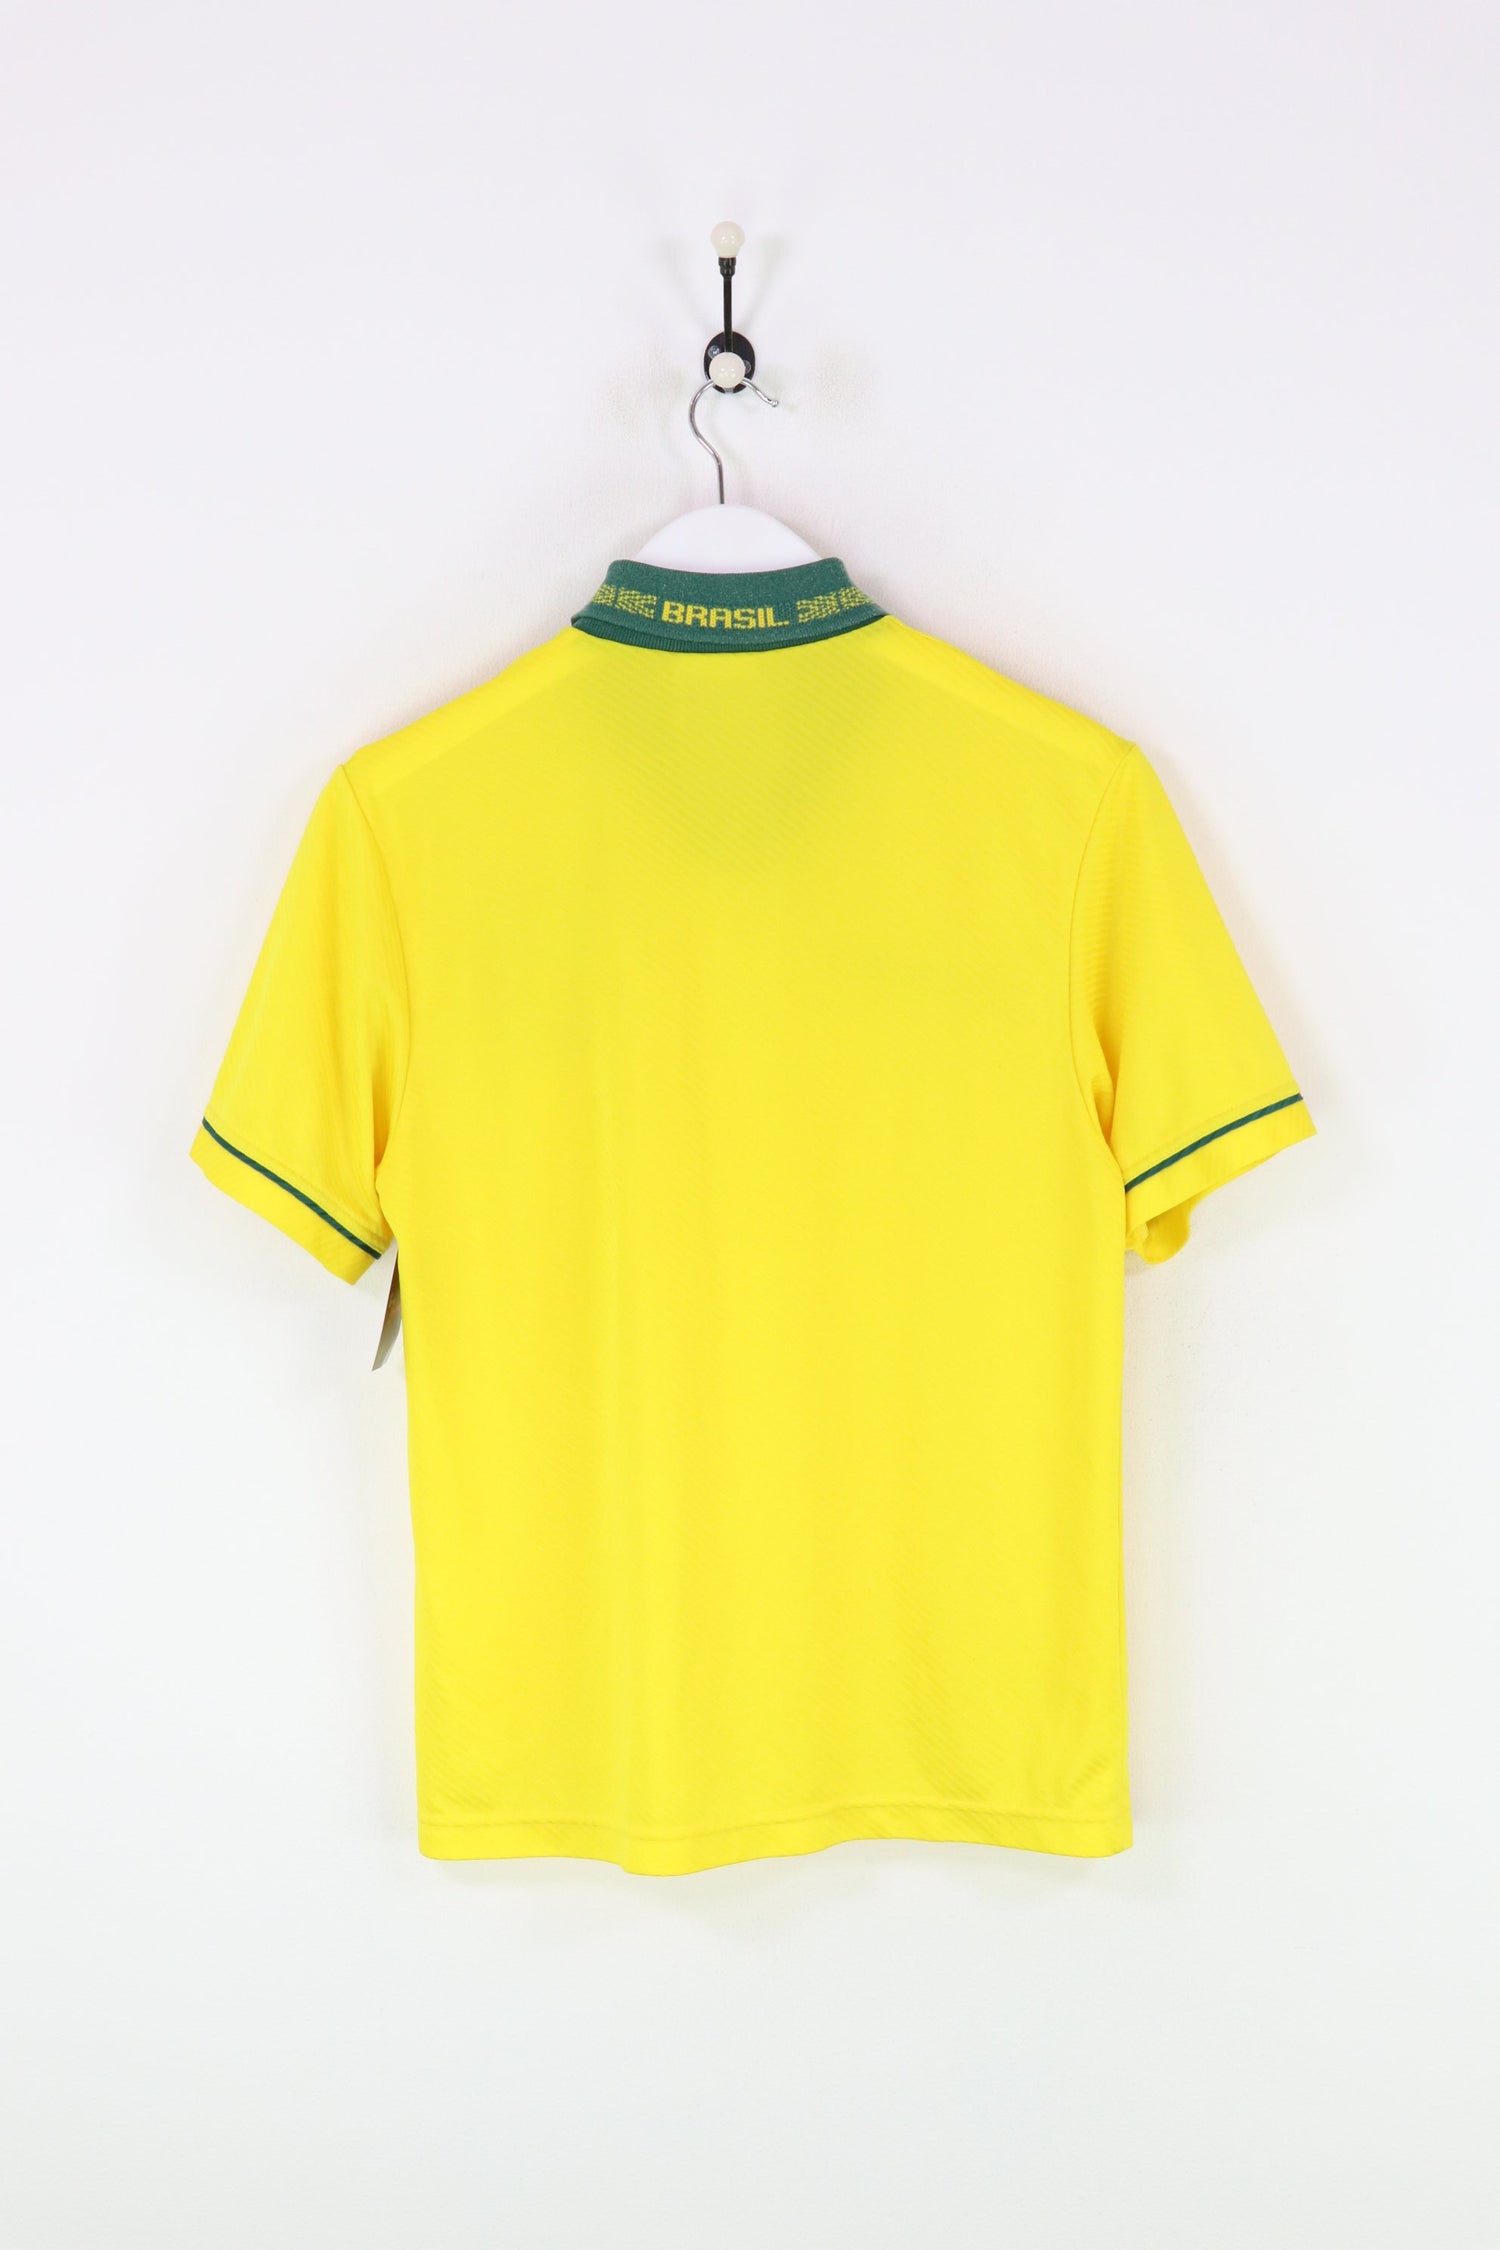 Umbro Football Shirt Yellow Small